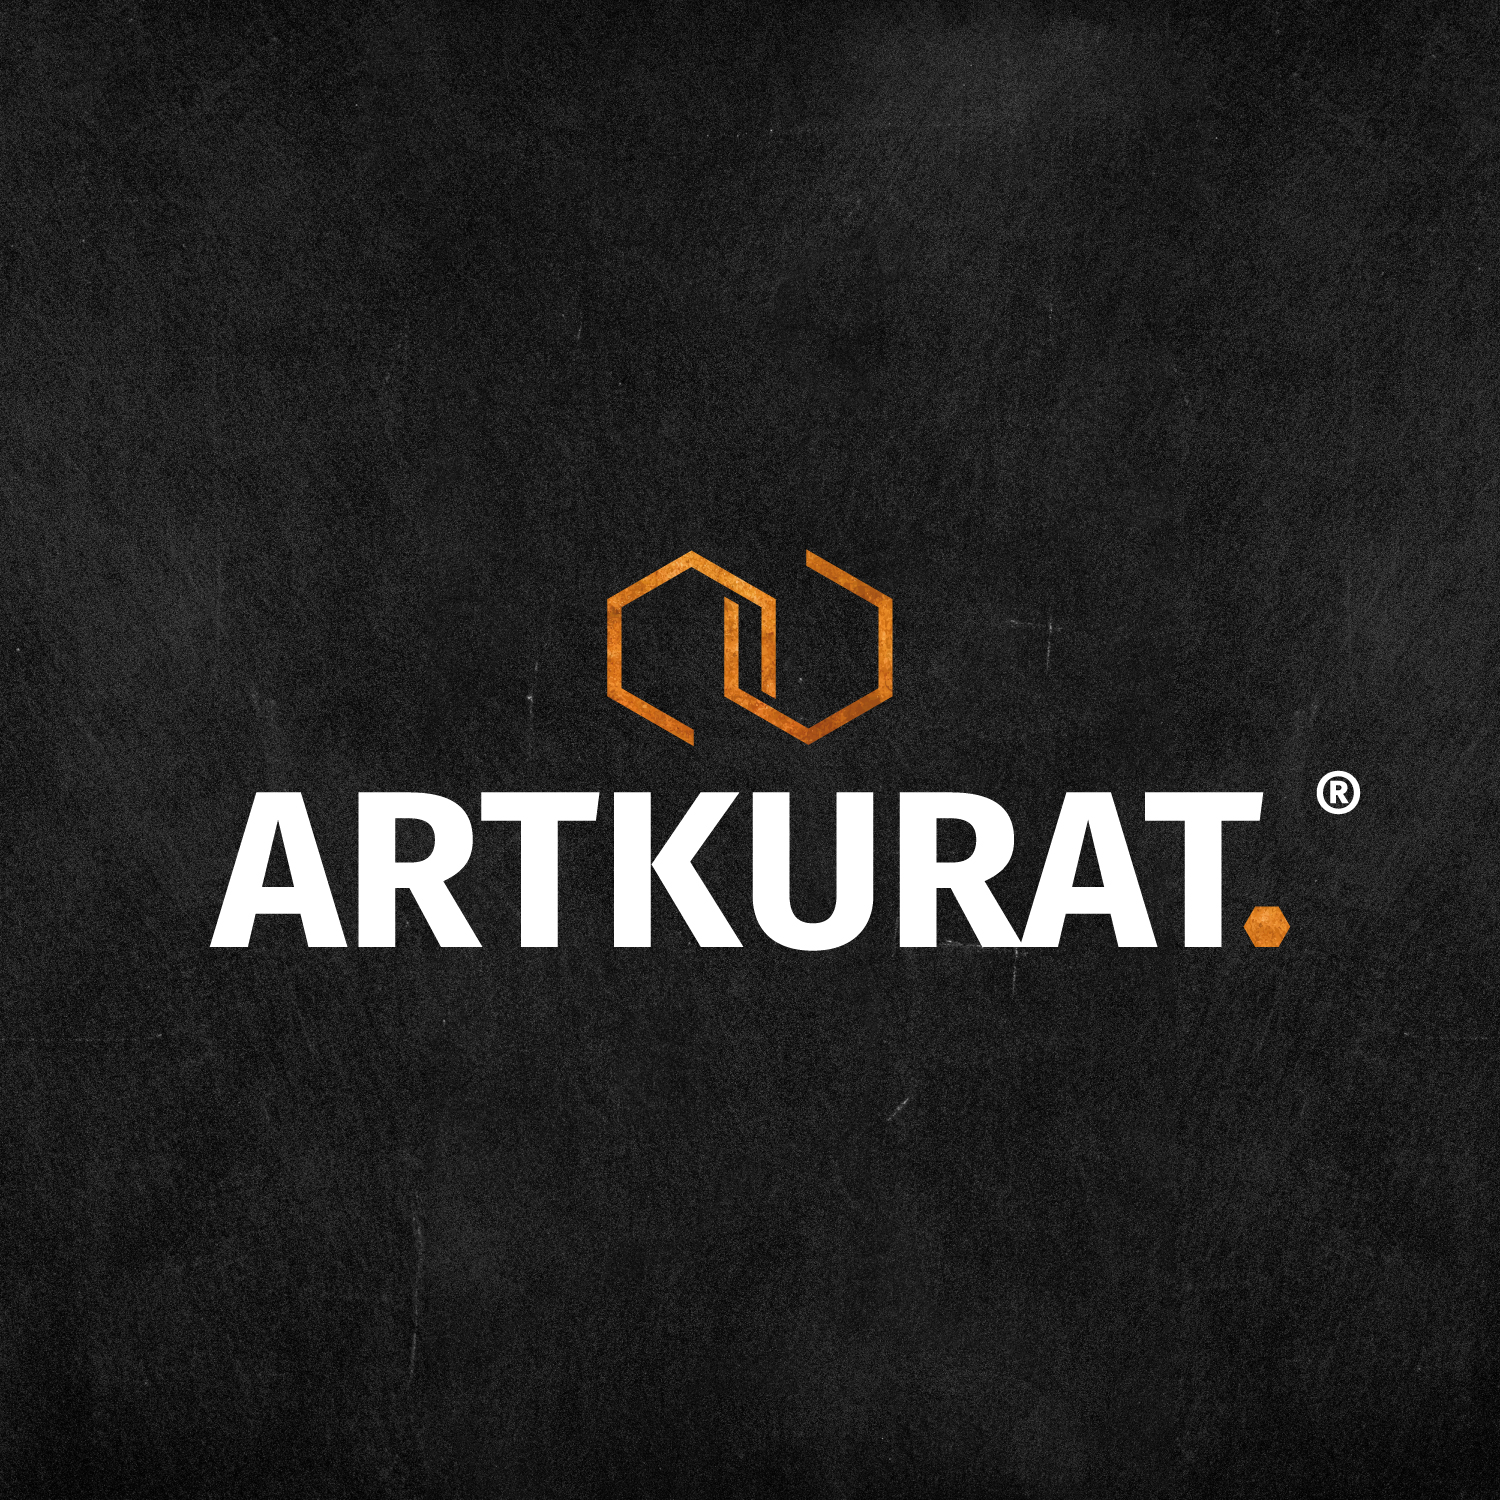 ARTKURAT ®